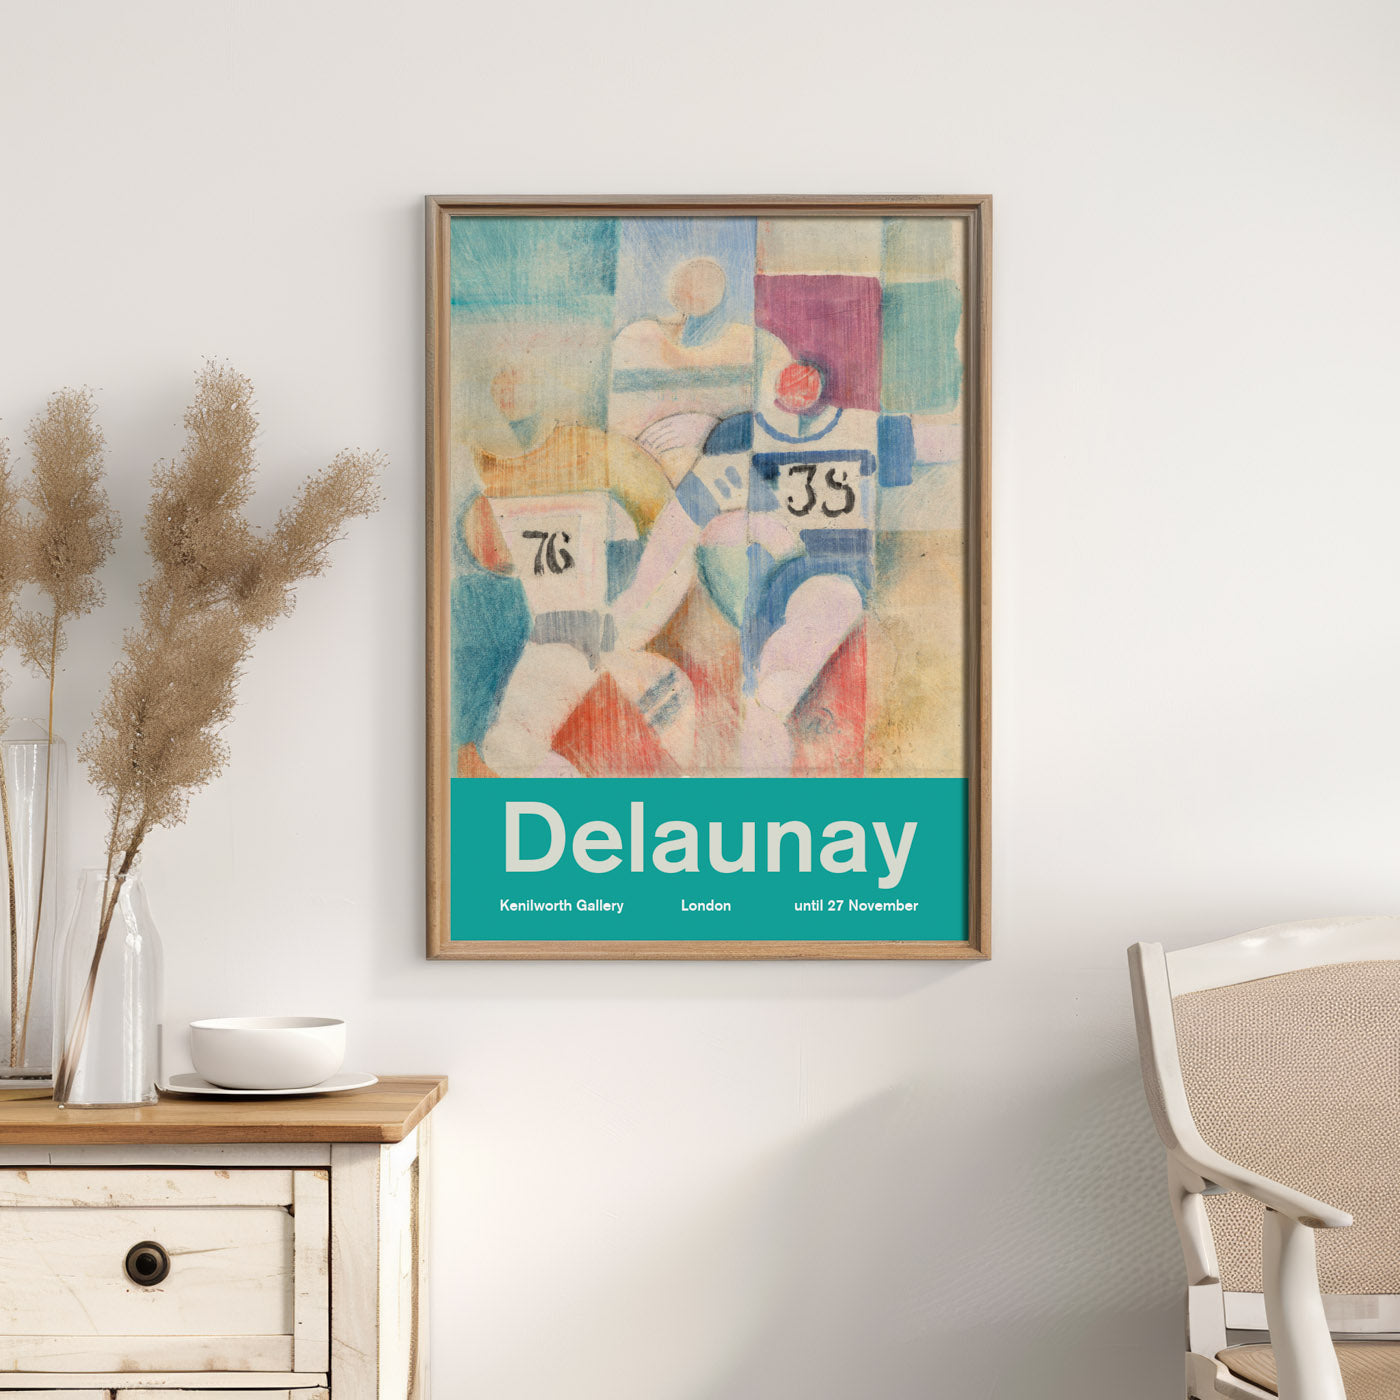 Robert Delaunay Exhibition Poster: 'Étude pour les coureurs' - 'Study for The Runners'